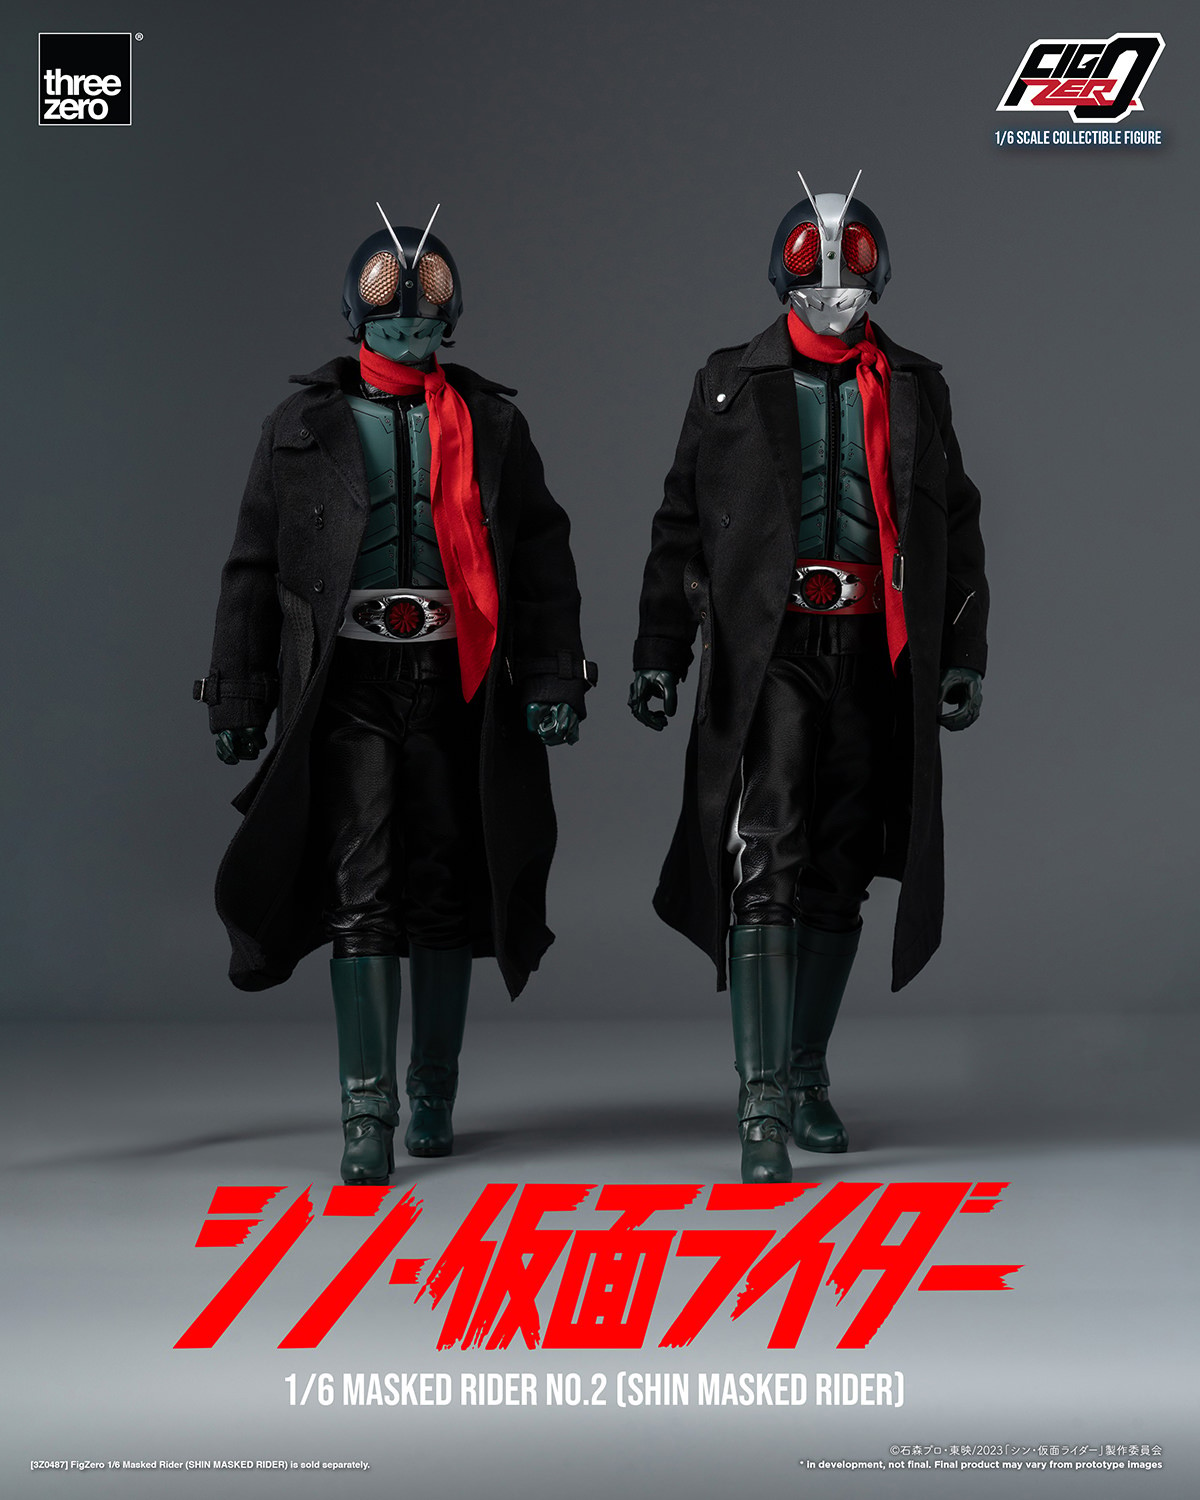 Shin Masked Rider No. 2 (Prototype Shown) View 20